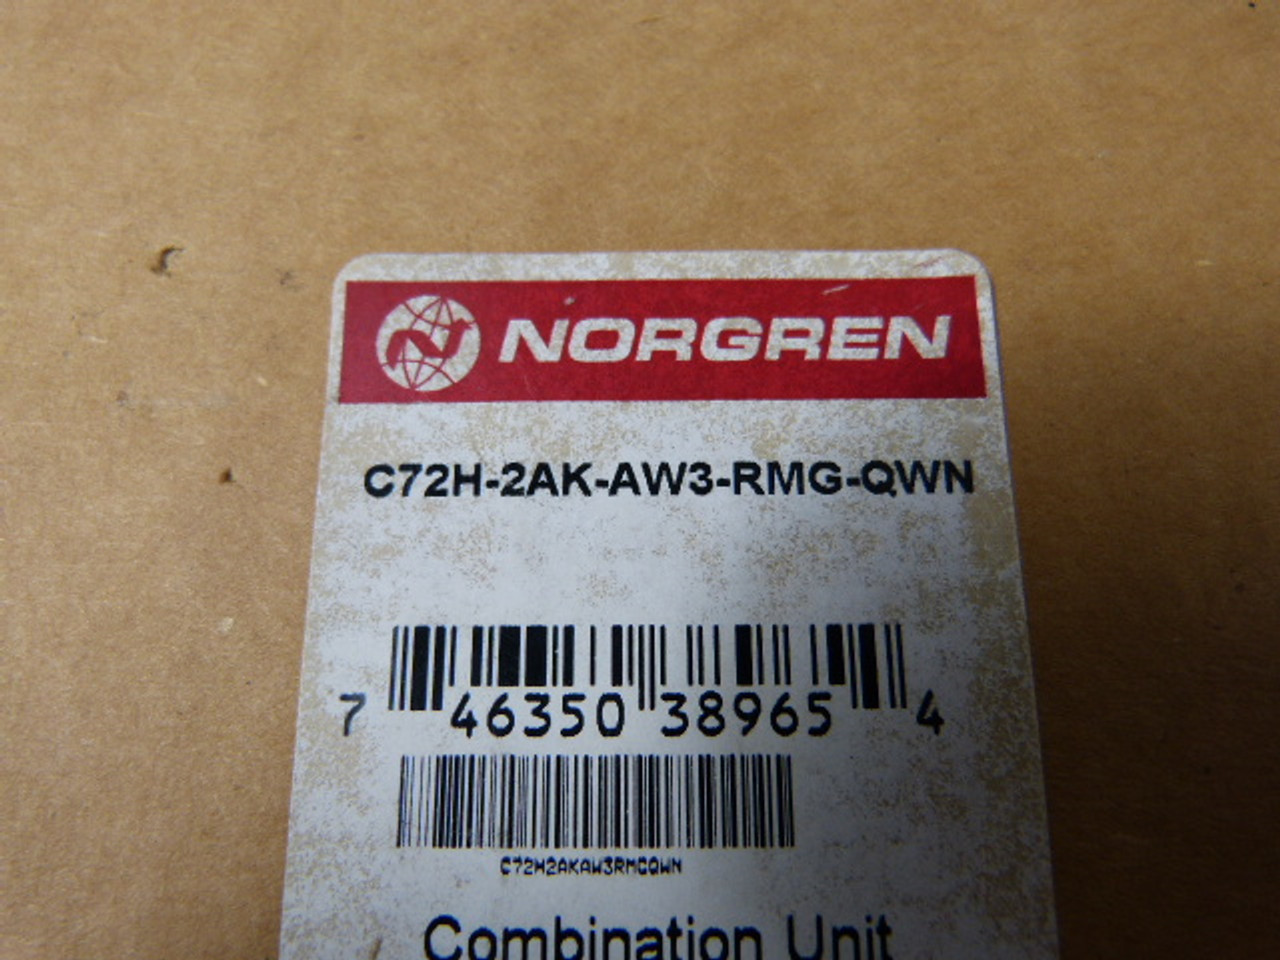 Norgren C72H-2AK-AW3-RMG-QWN Filter Regulator Lubricator ! NEW !